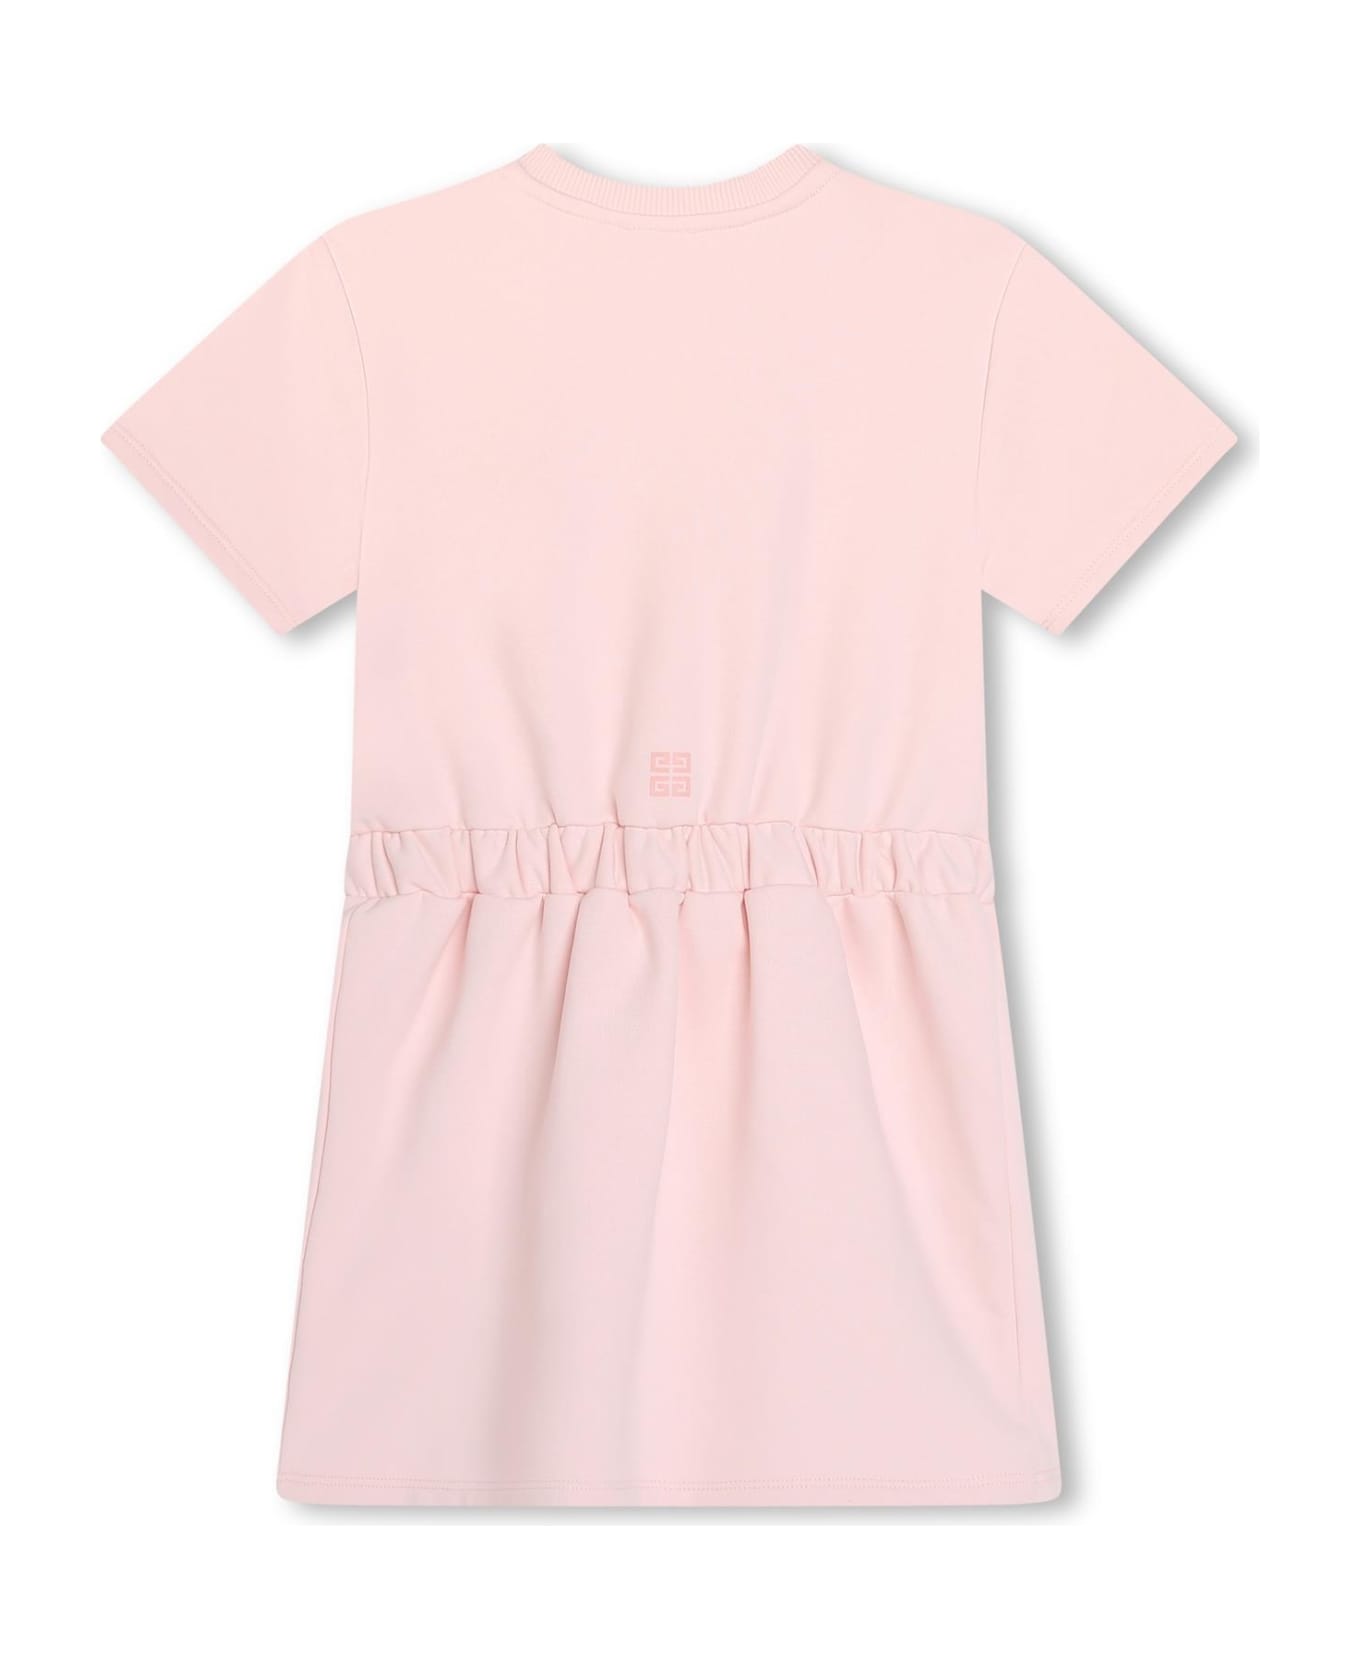 Givenchy Abito Con Stampa - Rosa